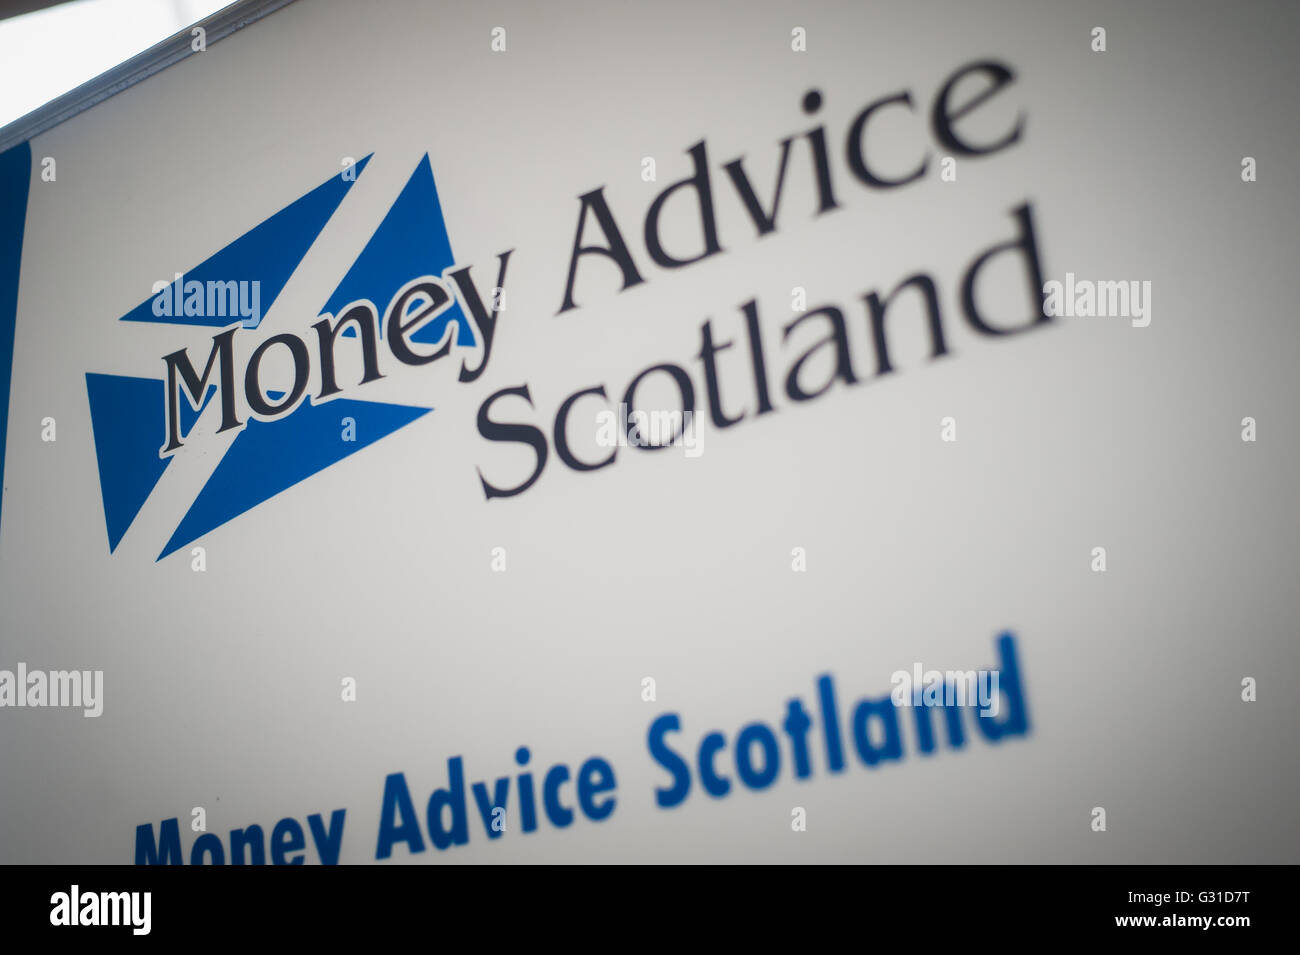 money advice Scotland logo on banner Stock Photo